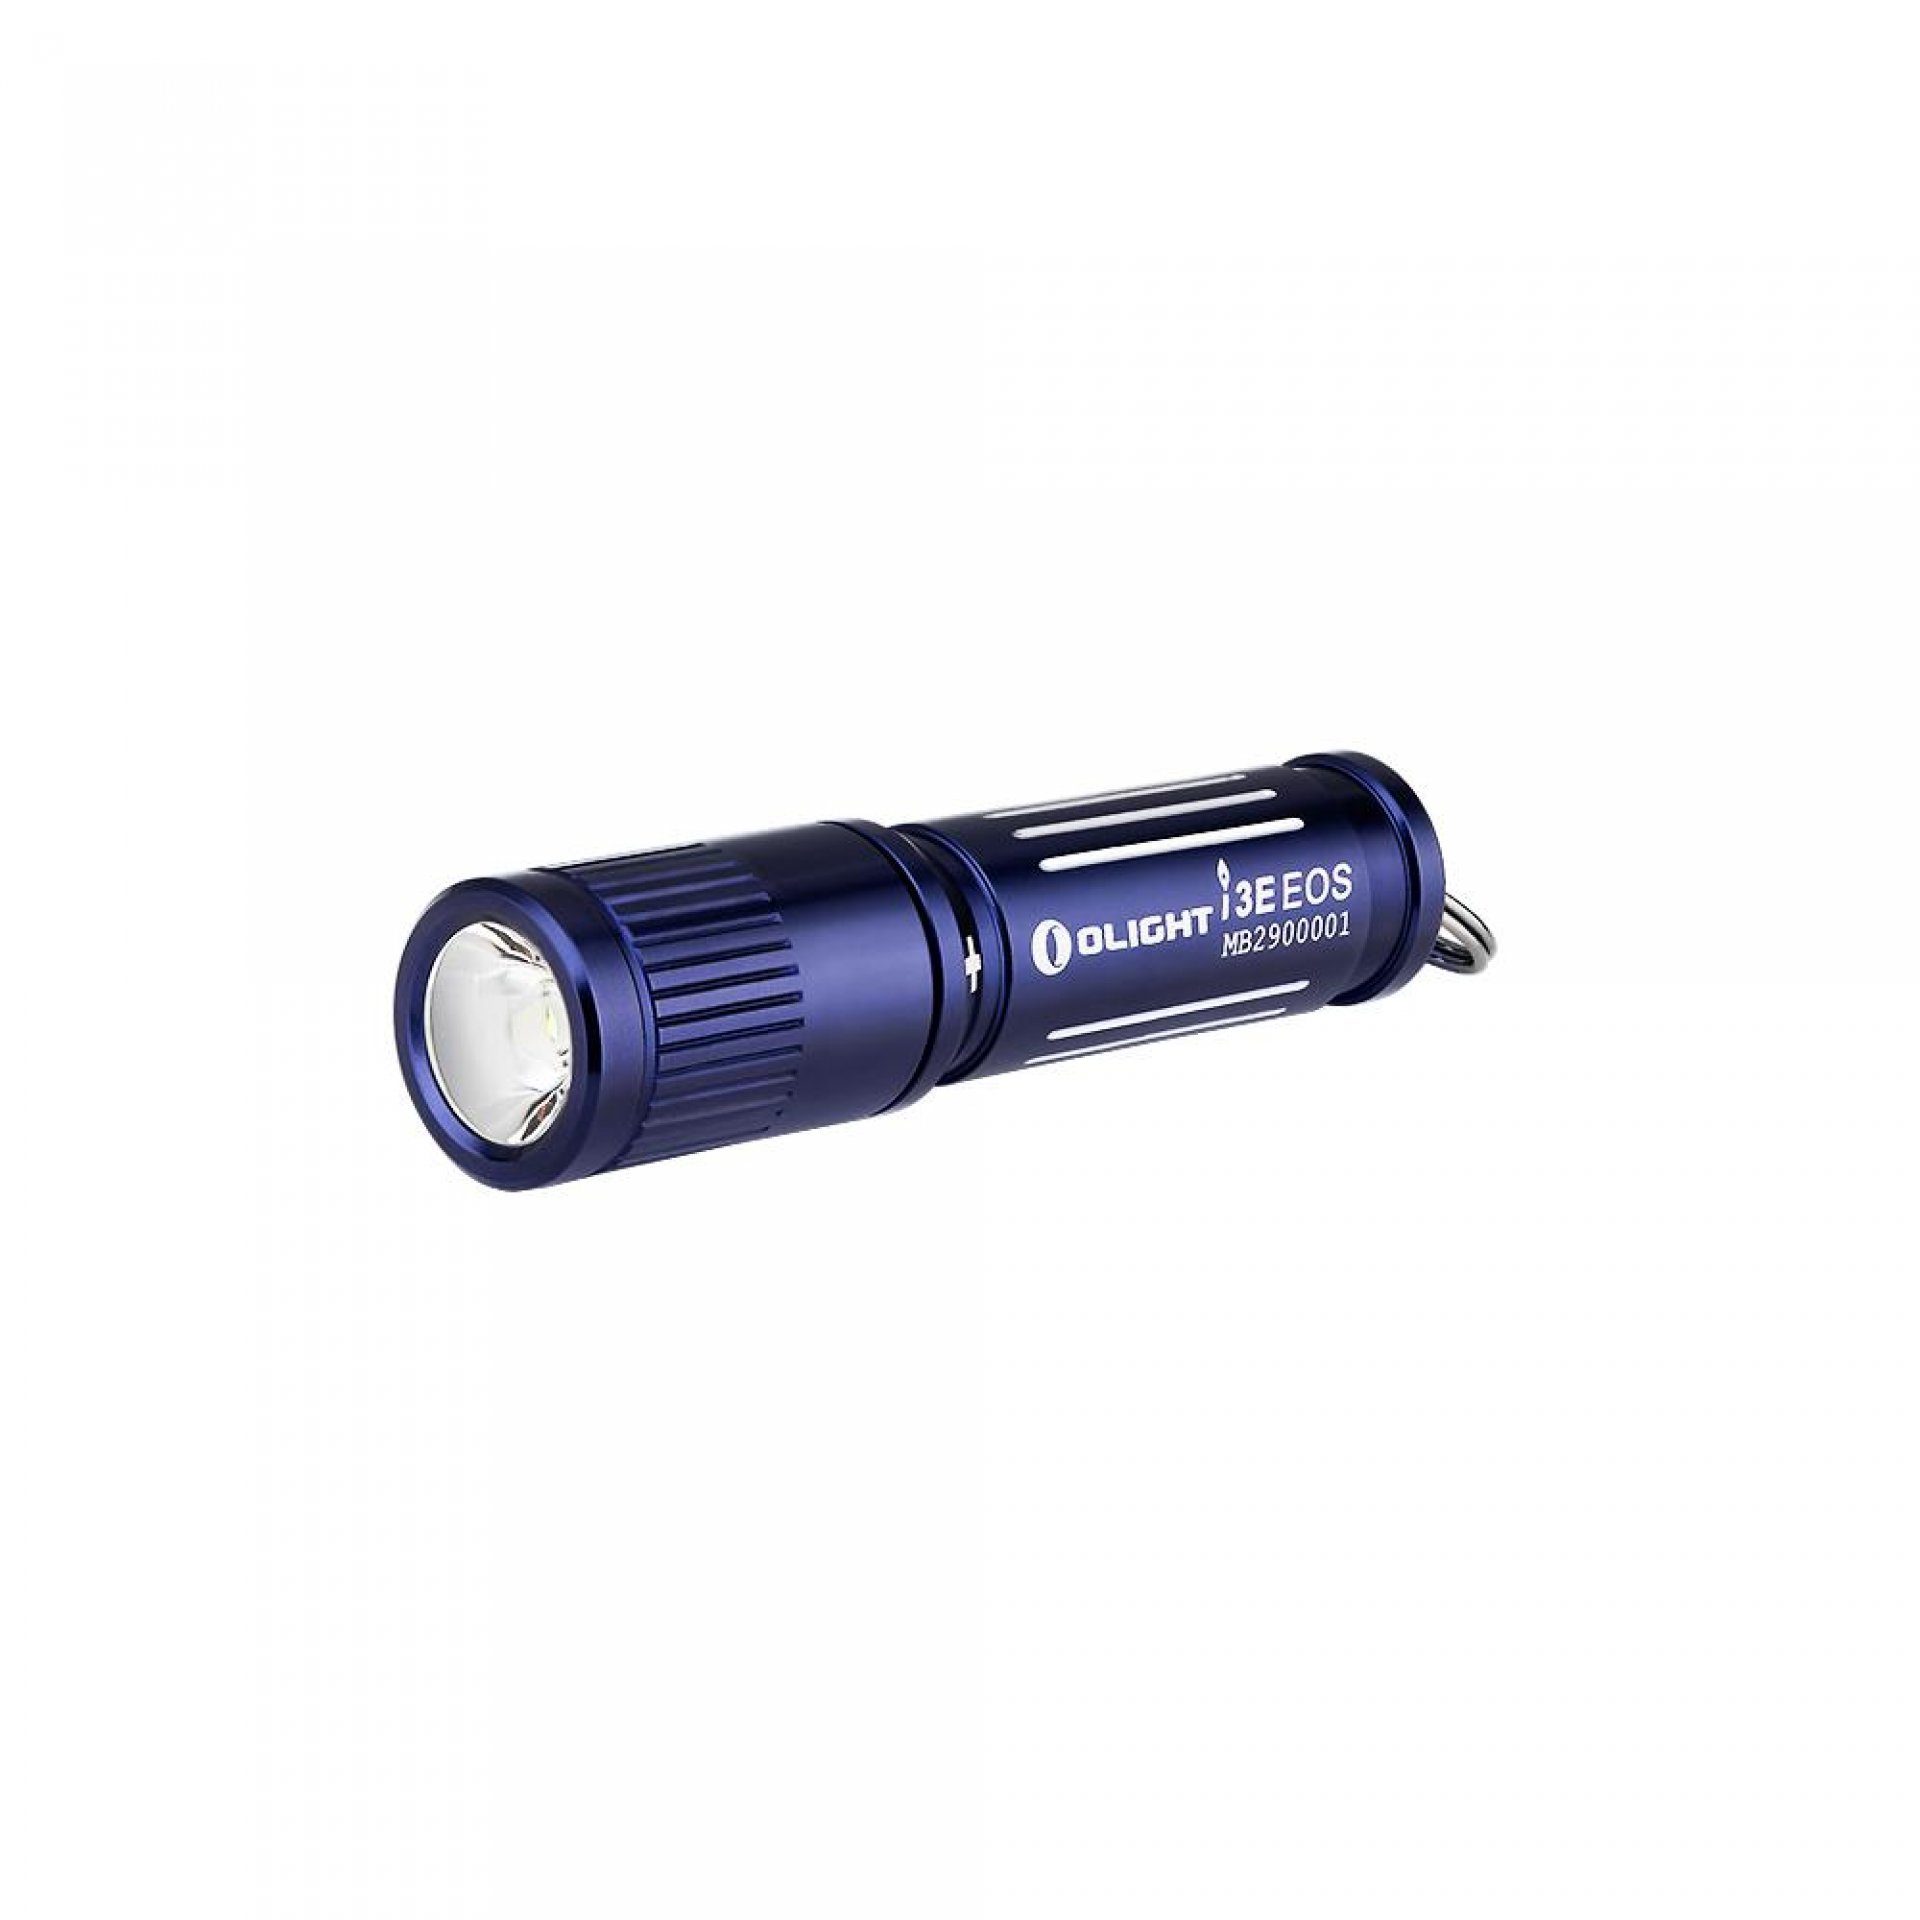 OLIGHT Taschenlampe OLIGHT I3E EOS Mini LED Taschenlampe Schlüsselanhänger 90 Lumen Königsblau